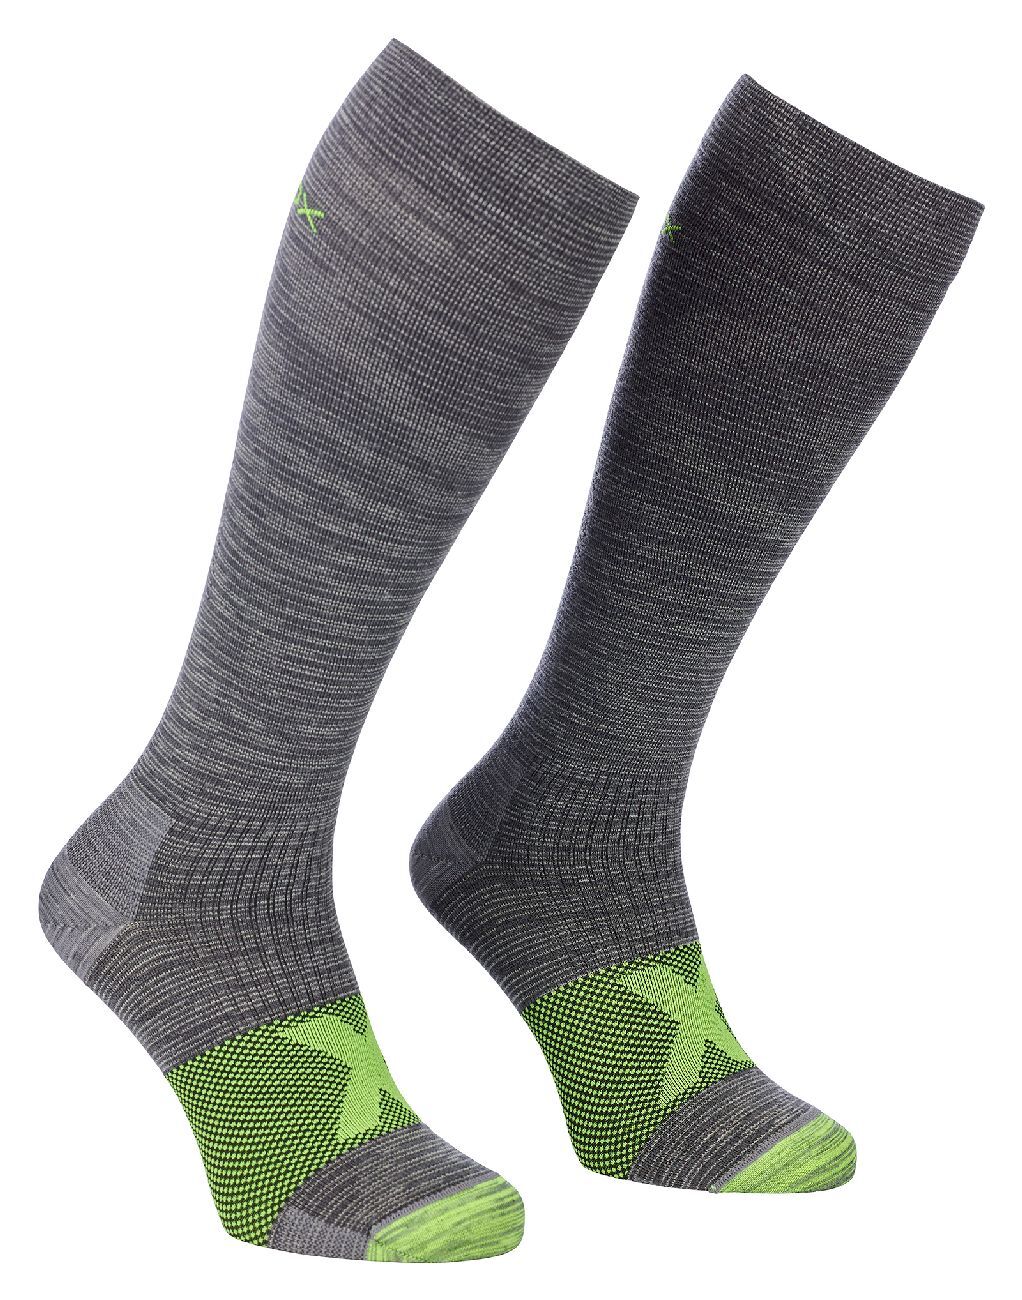 Ortovox Tour Compression Long Socks - Ski socks - Men's